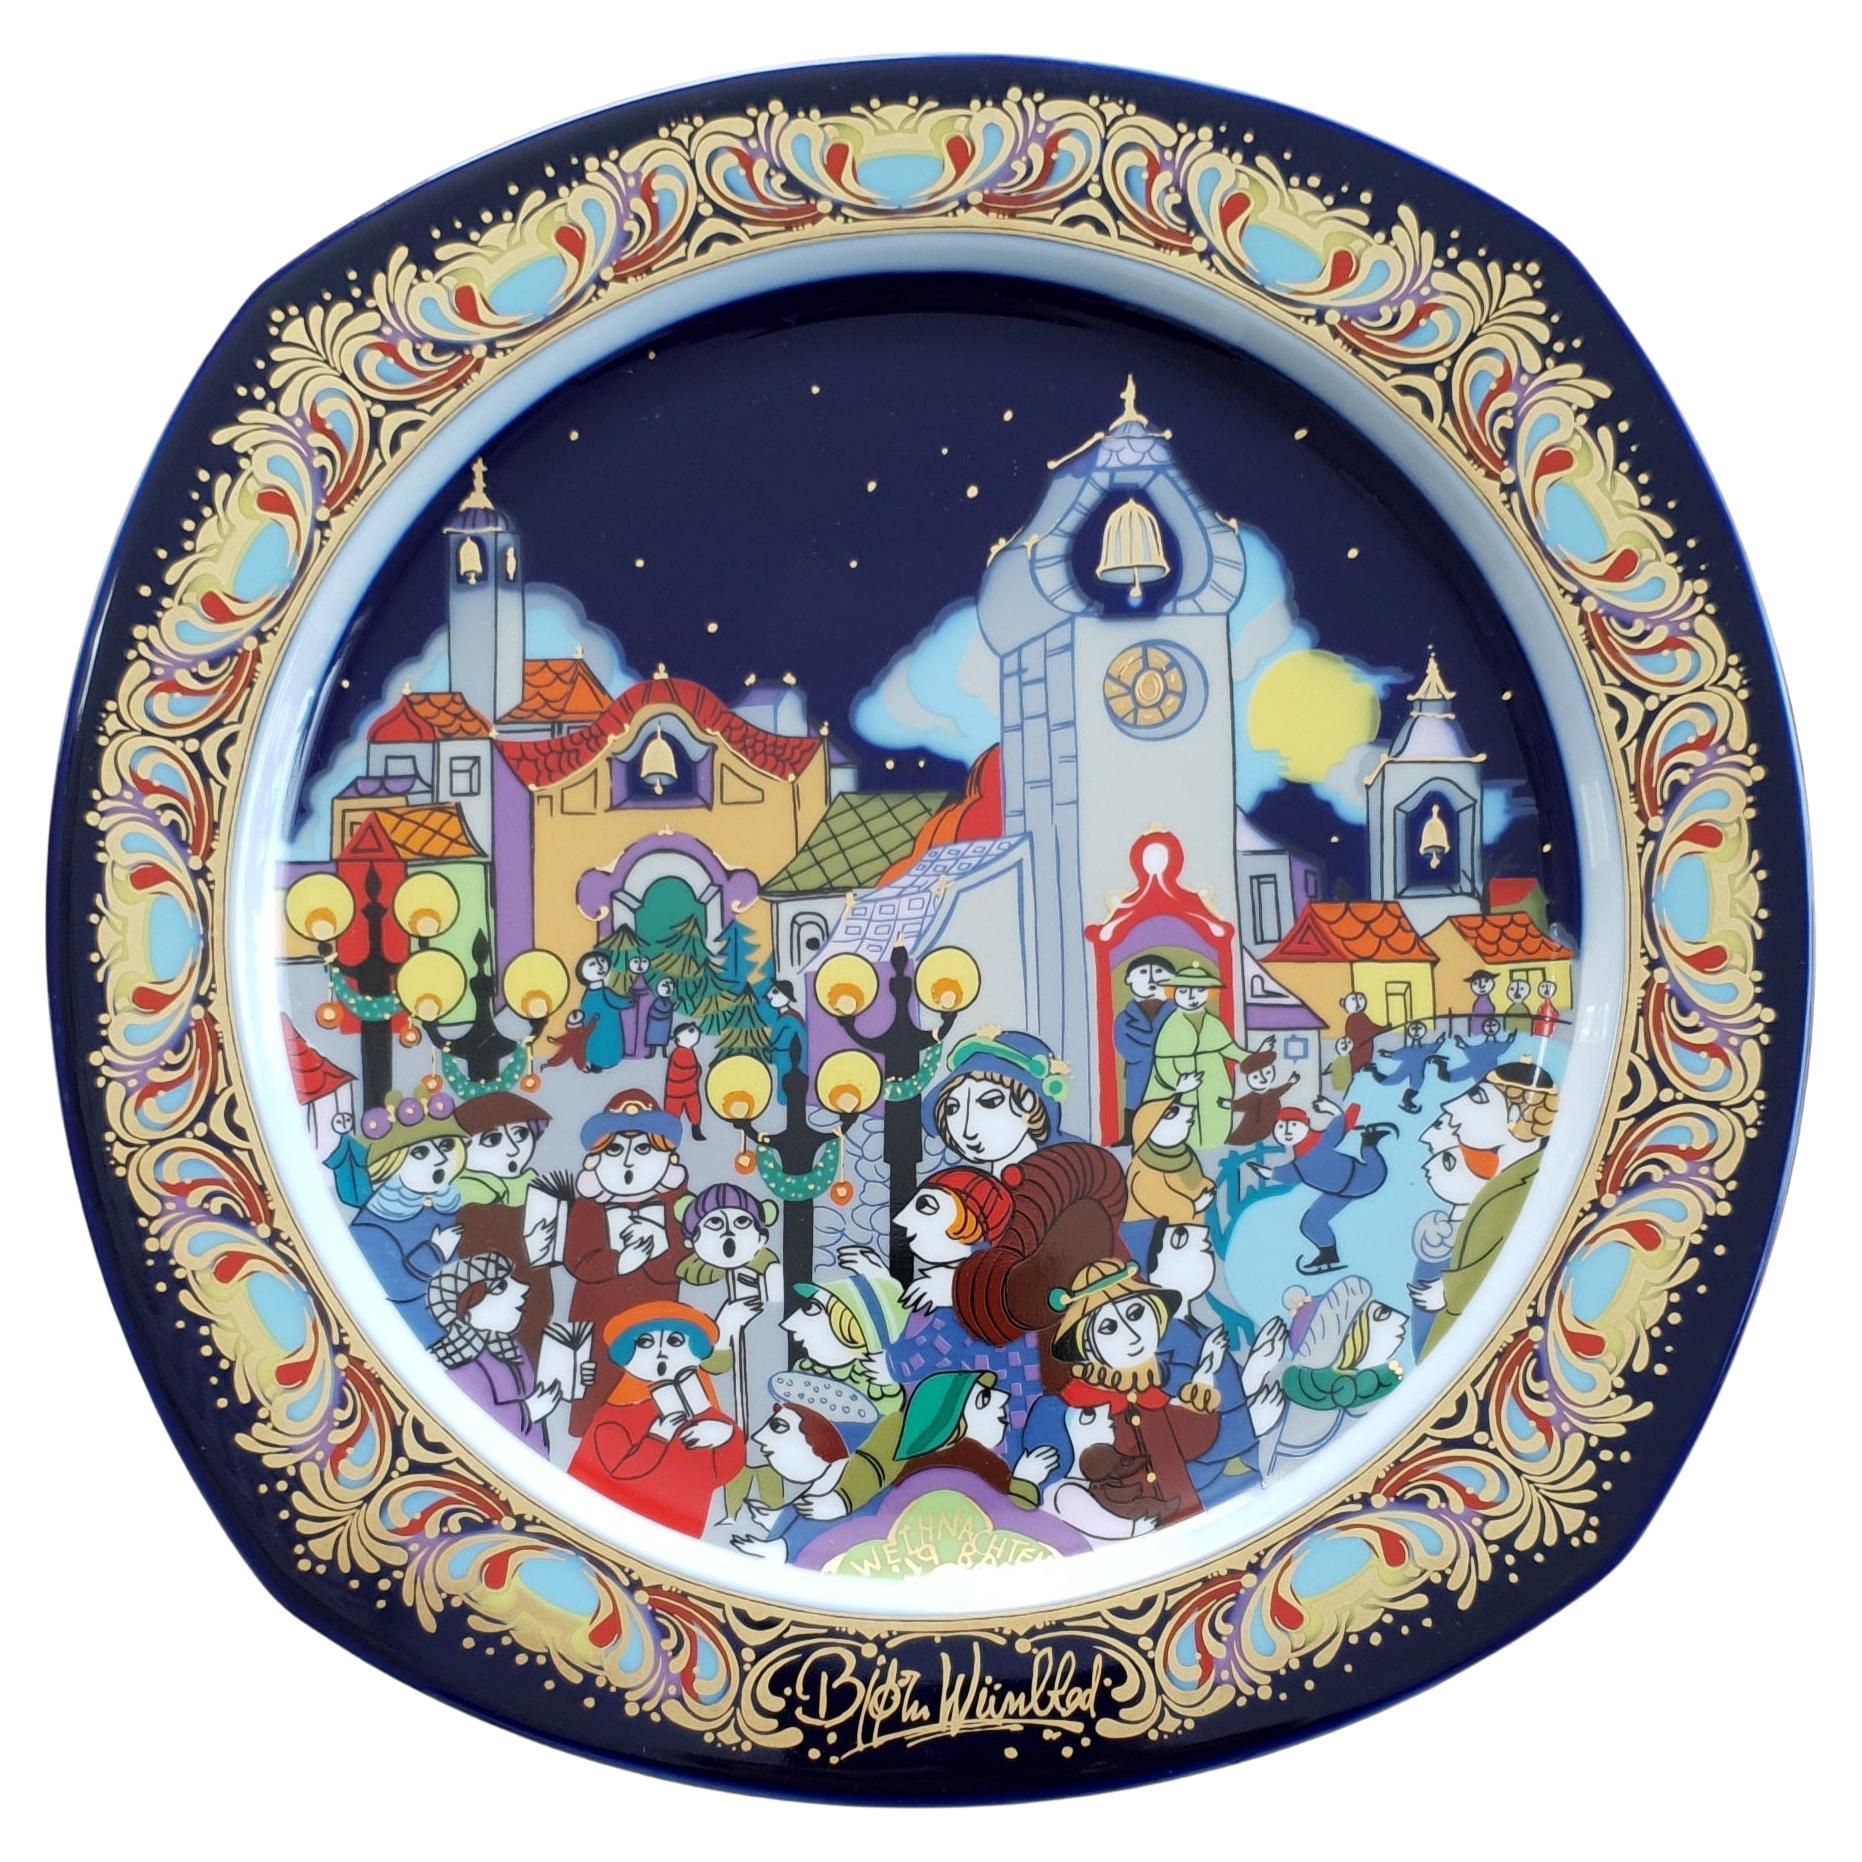 Plaque de Noël 1988 de Bjørn Wiinblad "Christmas Carols" (chants de Noël) en vente